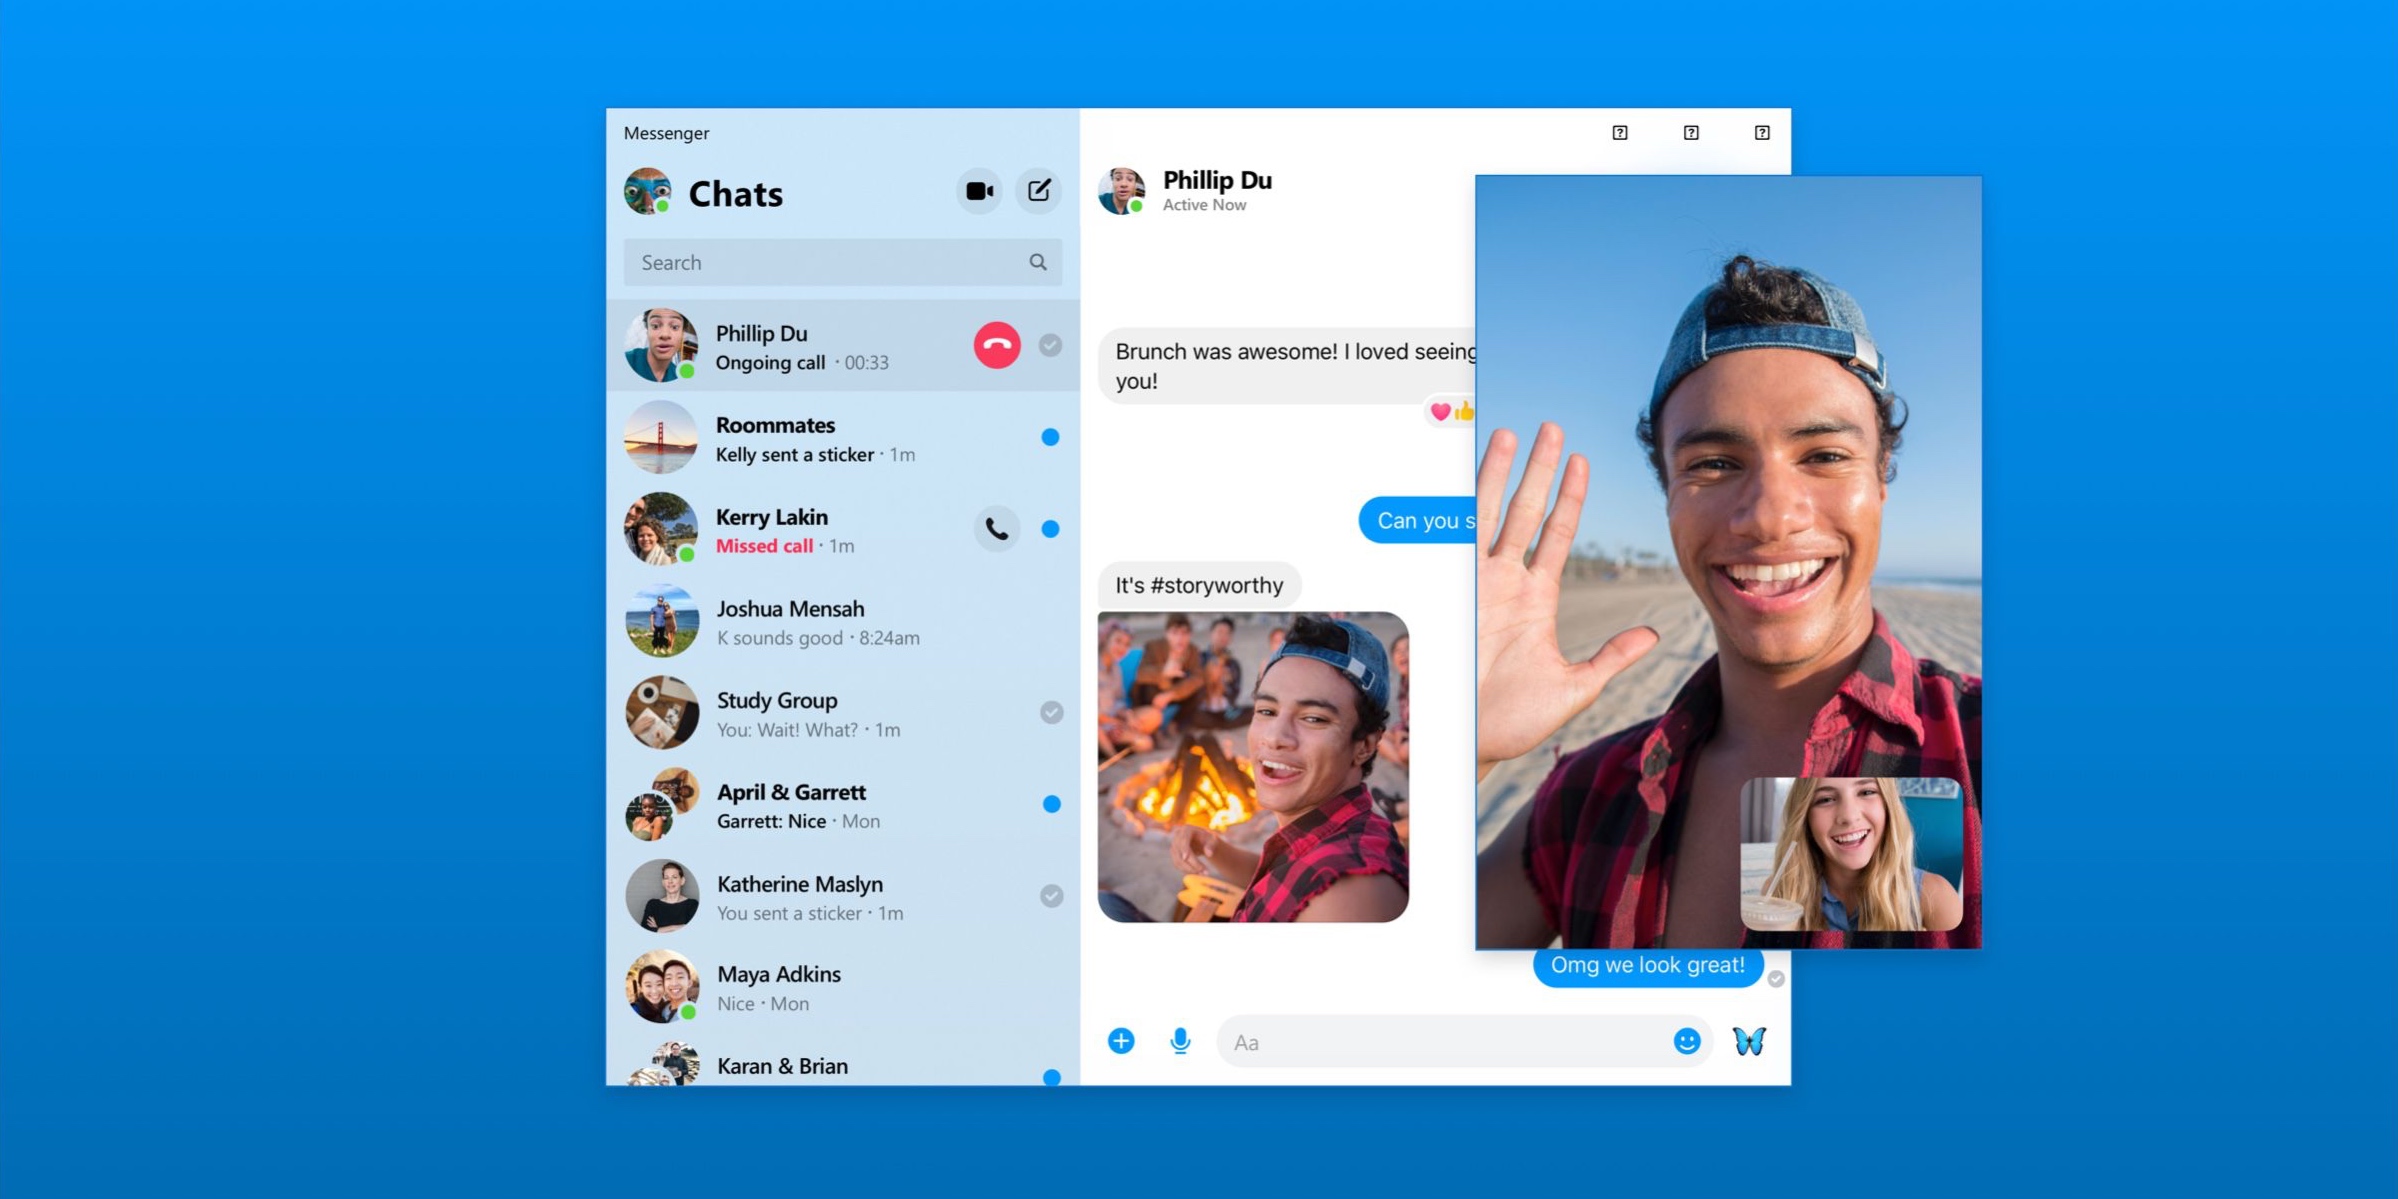 facebook messenger app for mac 2017